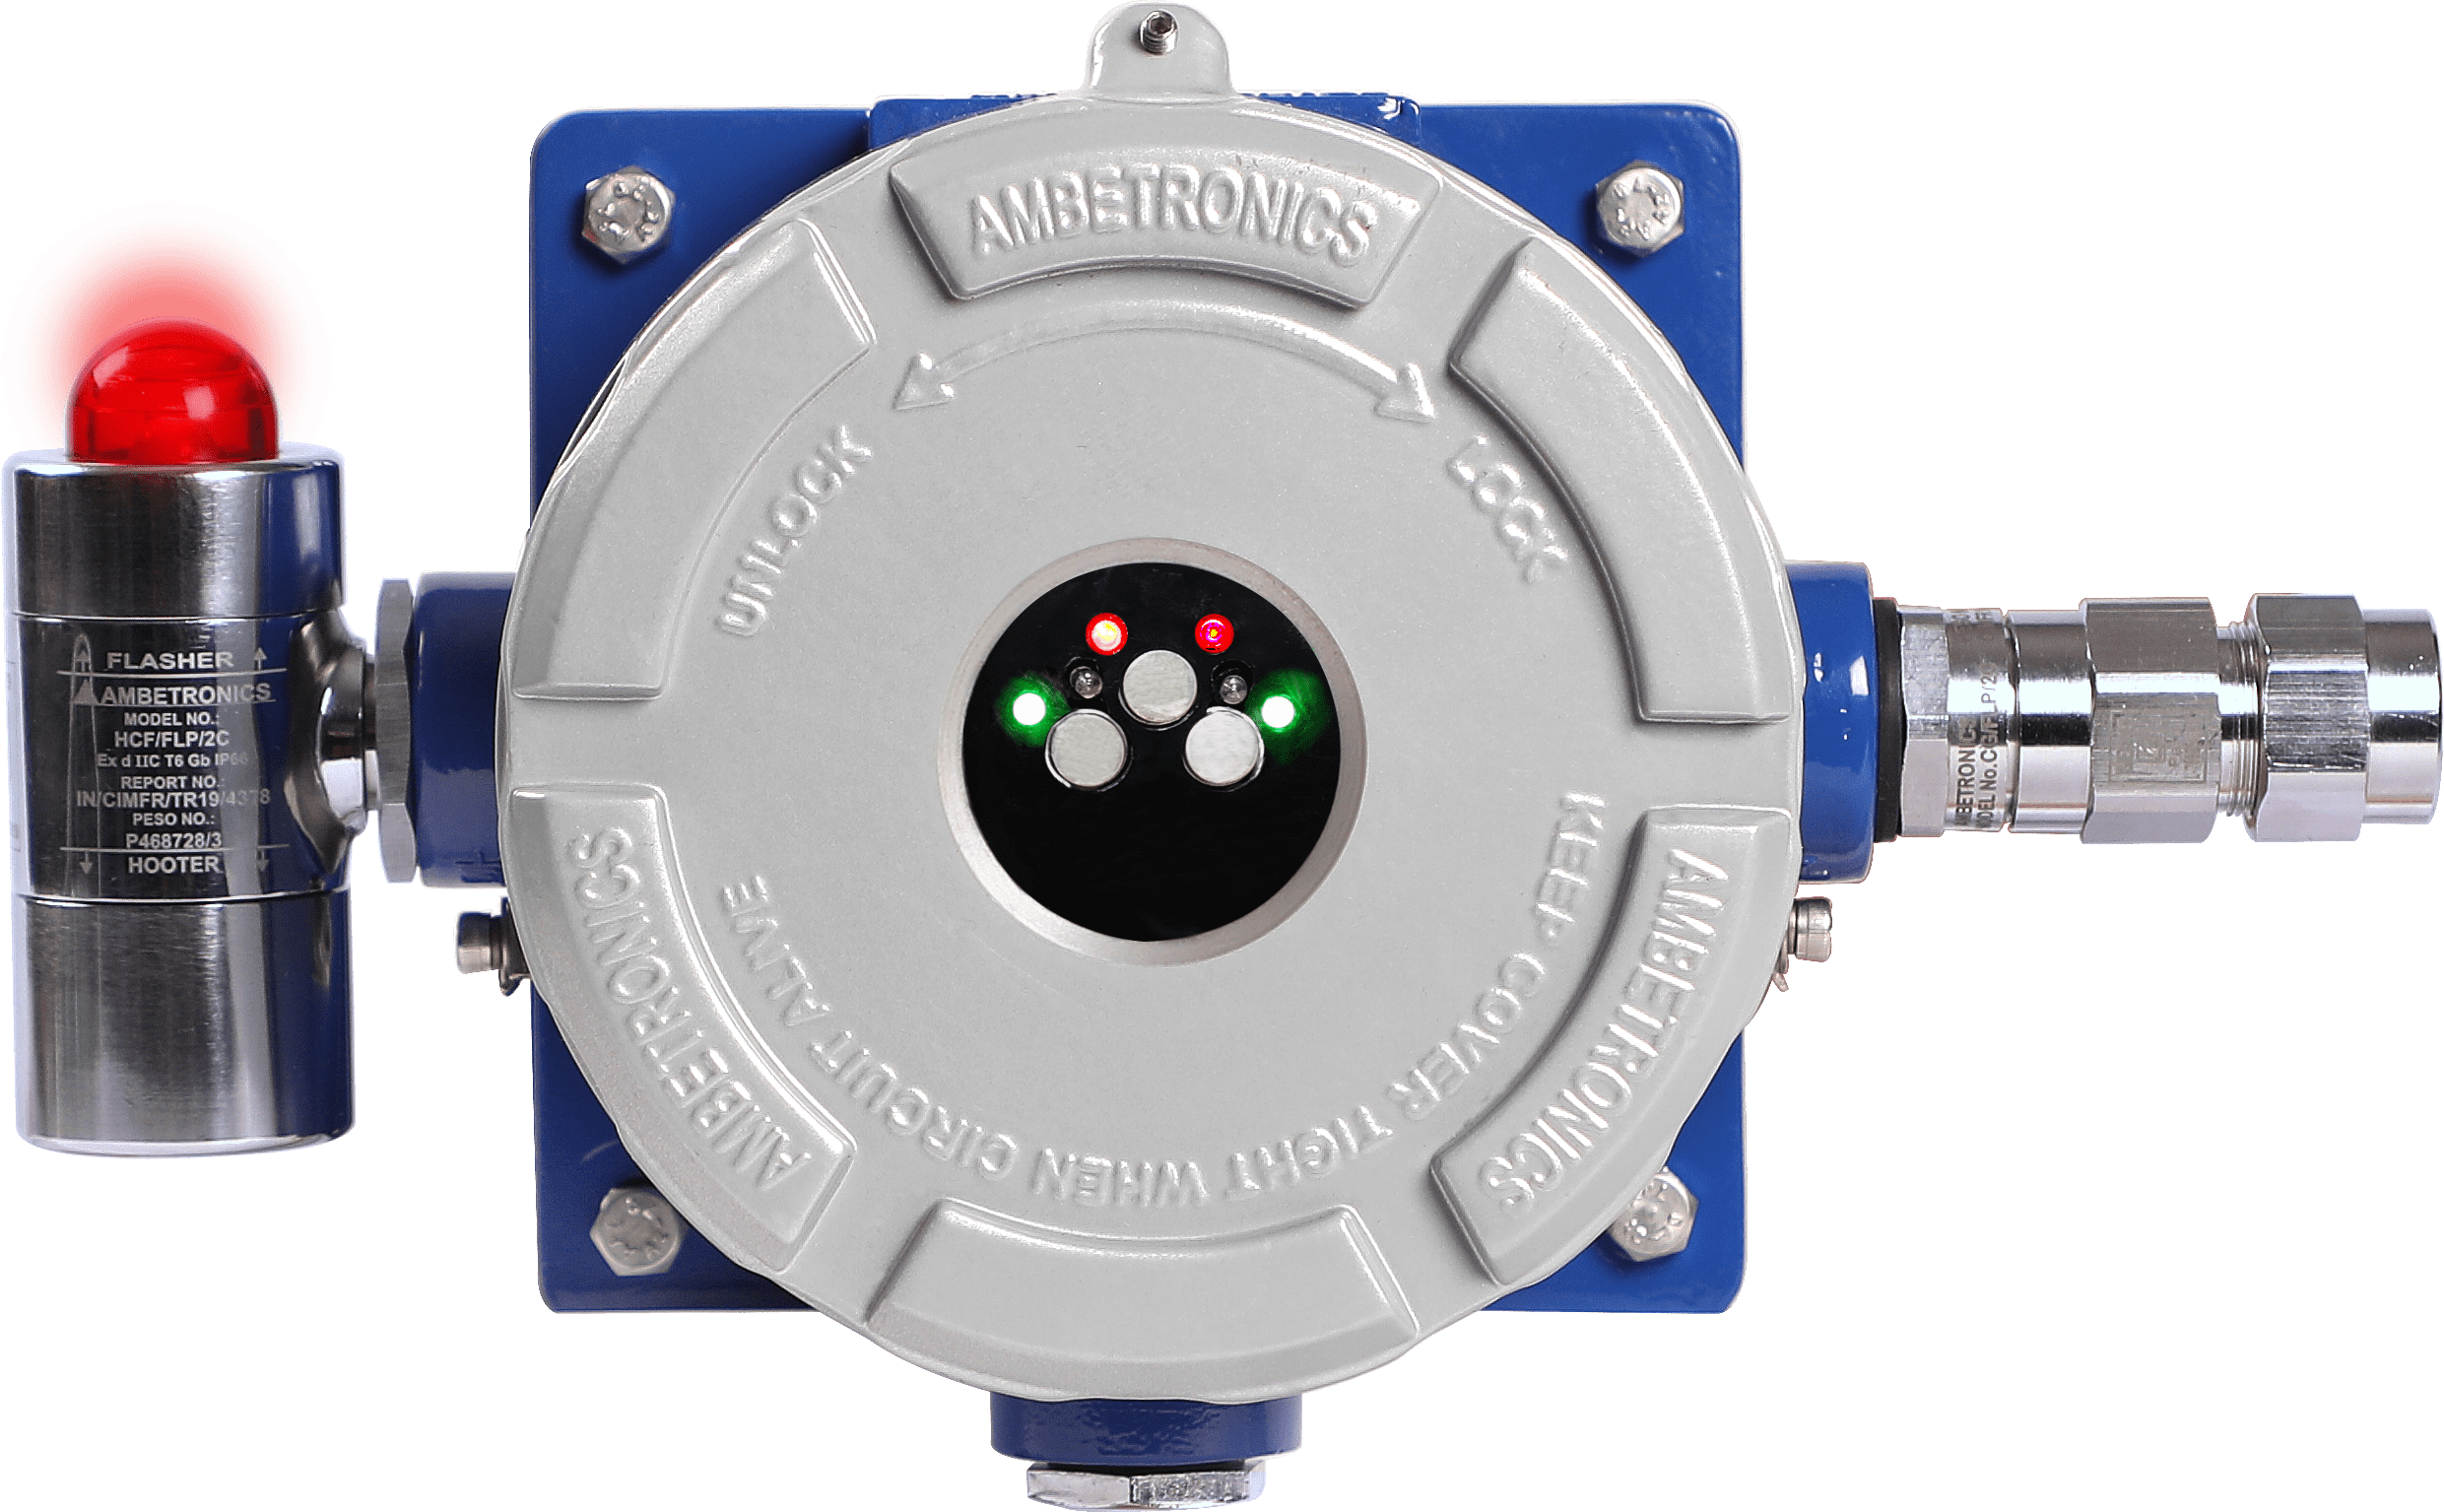 FLD-3300-FLP: Triple IR Flame Detector for Hazardous Environments